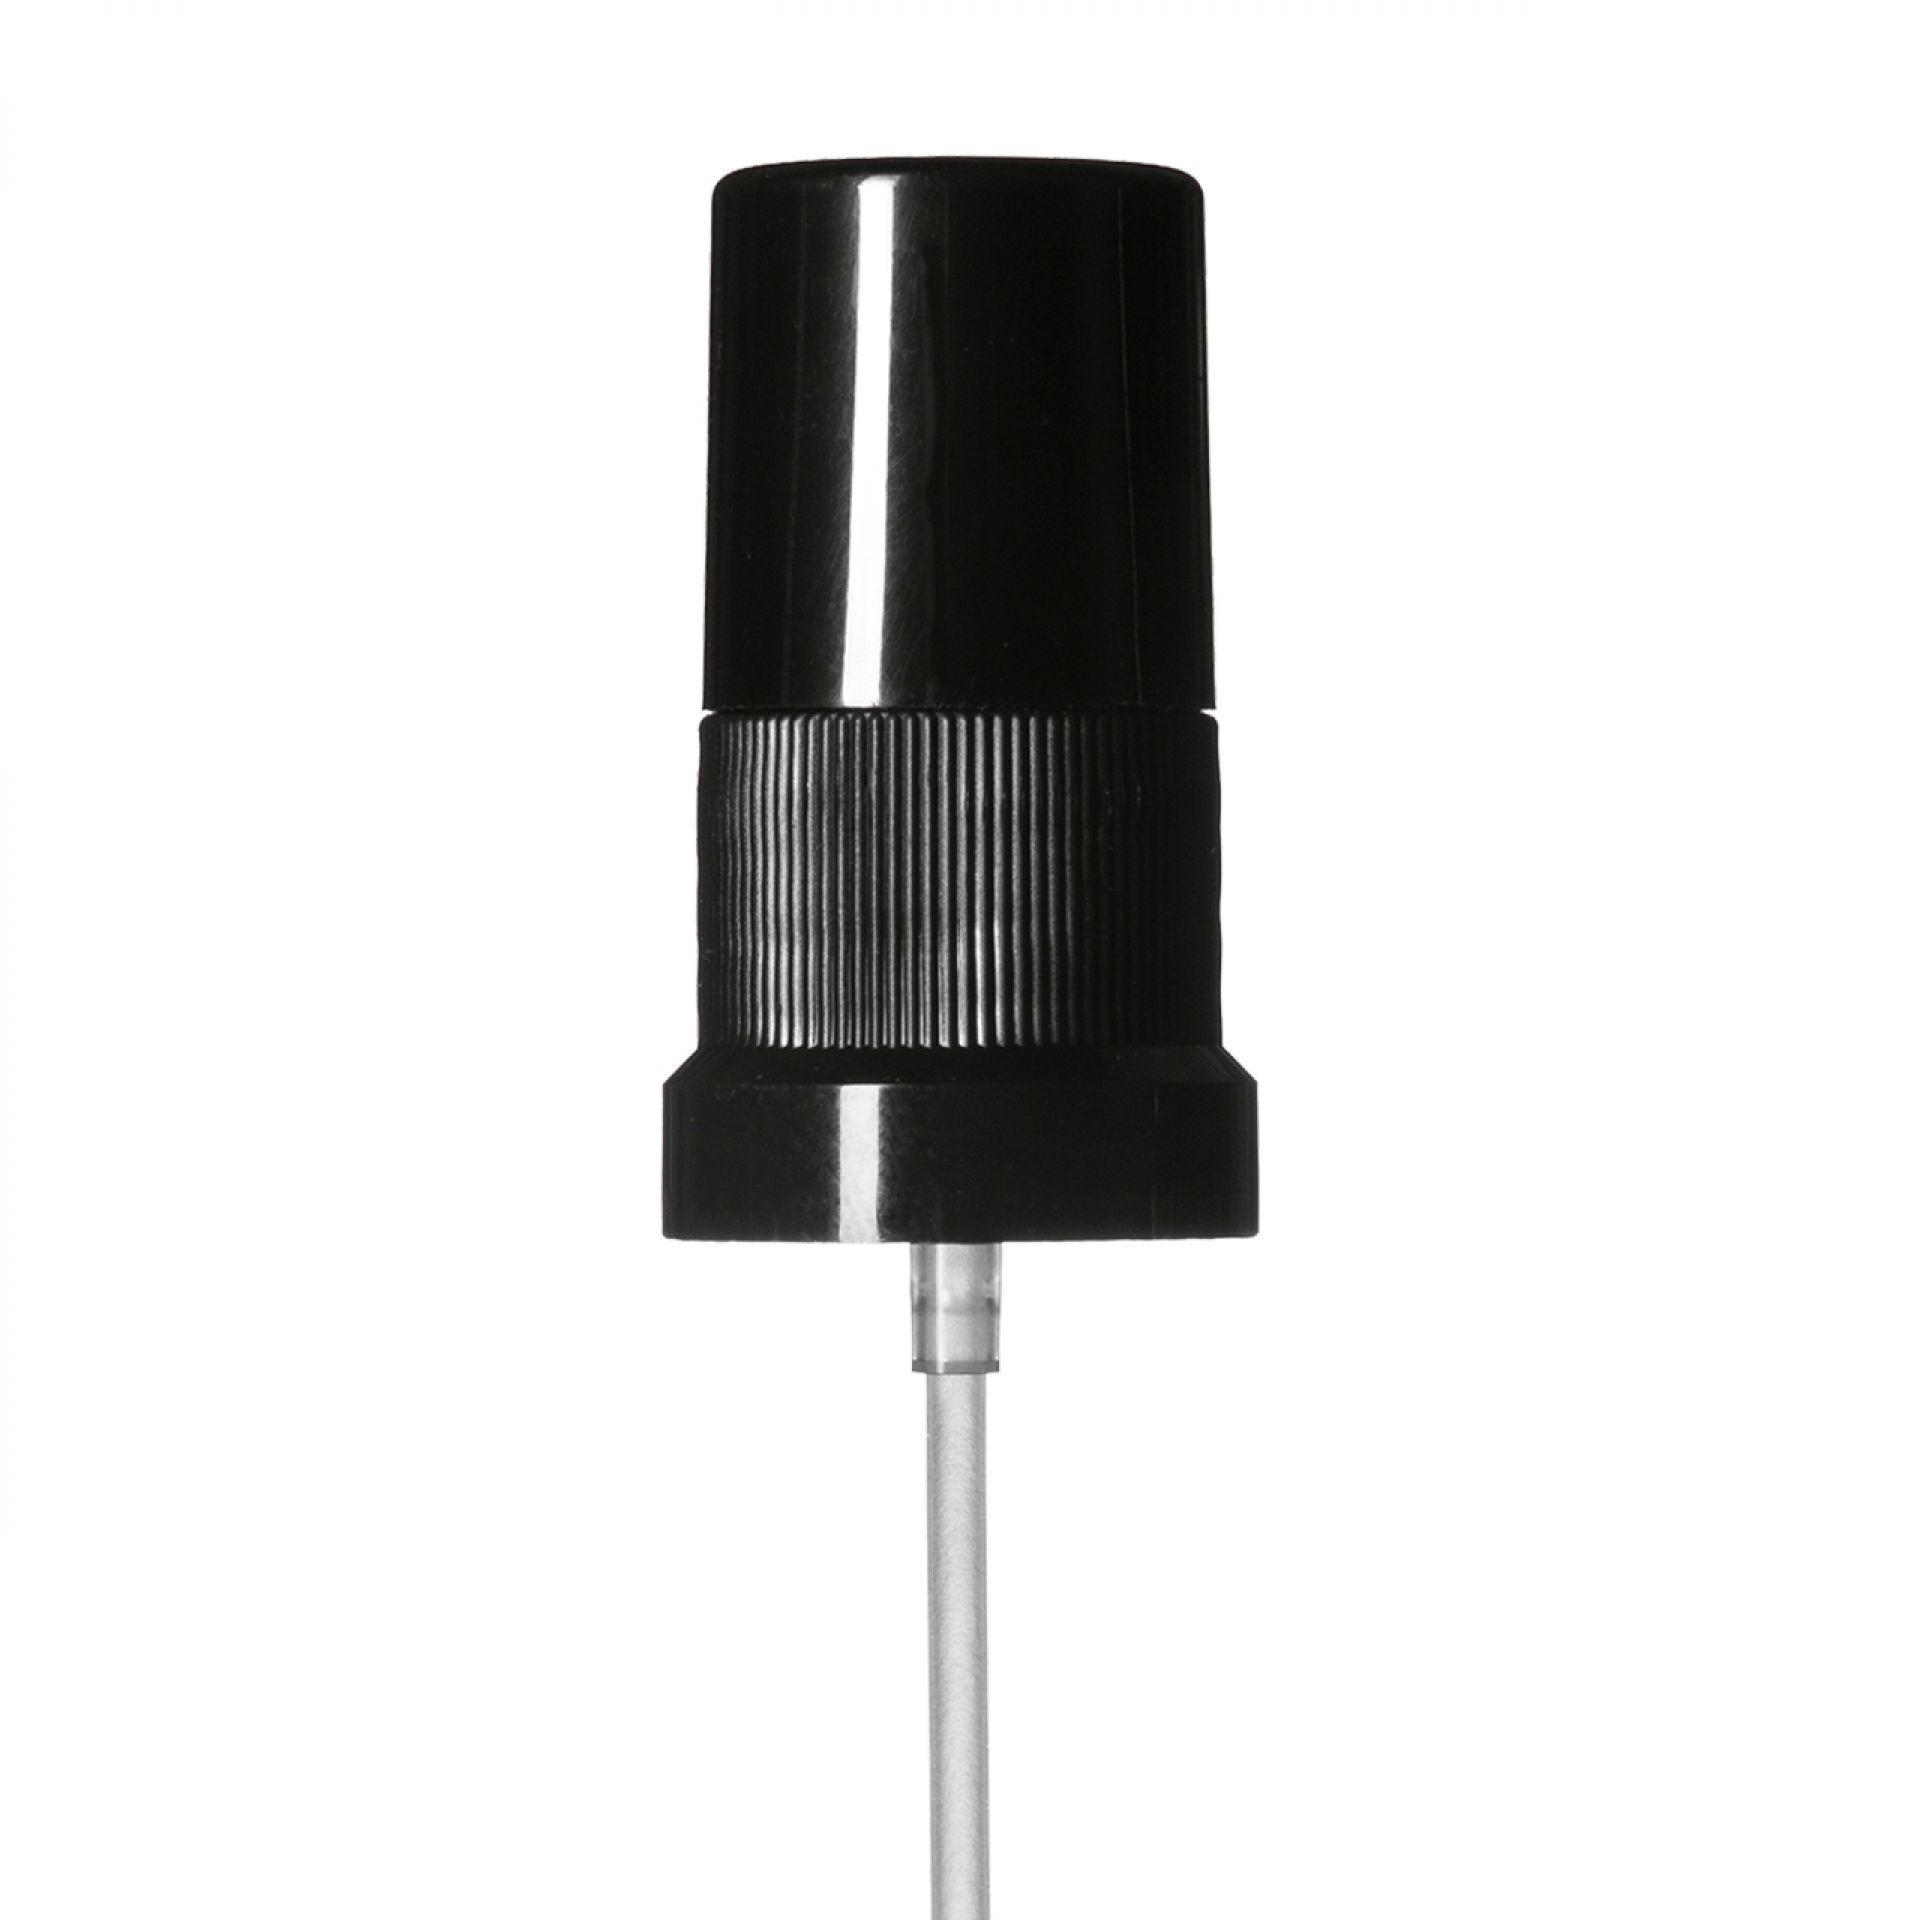 Mist sprayer Classic, DIN18, PP, black, ribbed, dose 0.10 ml, black overcap (Orion 10-70)